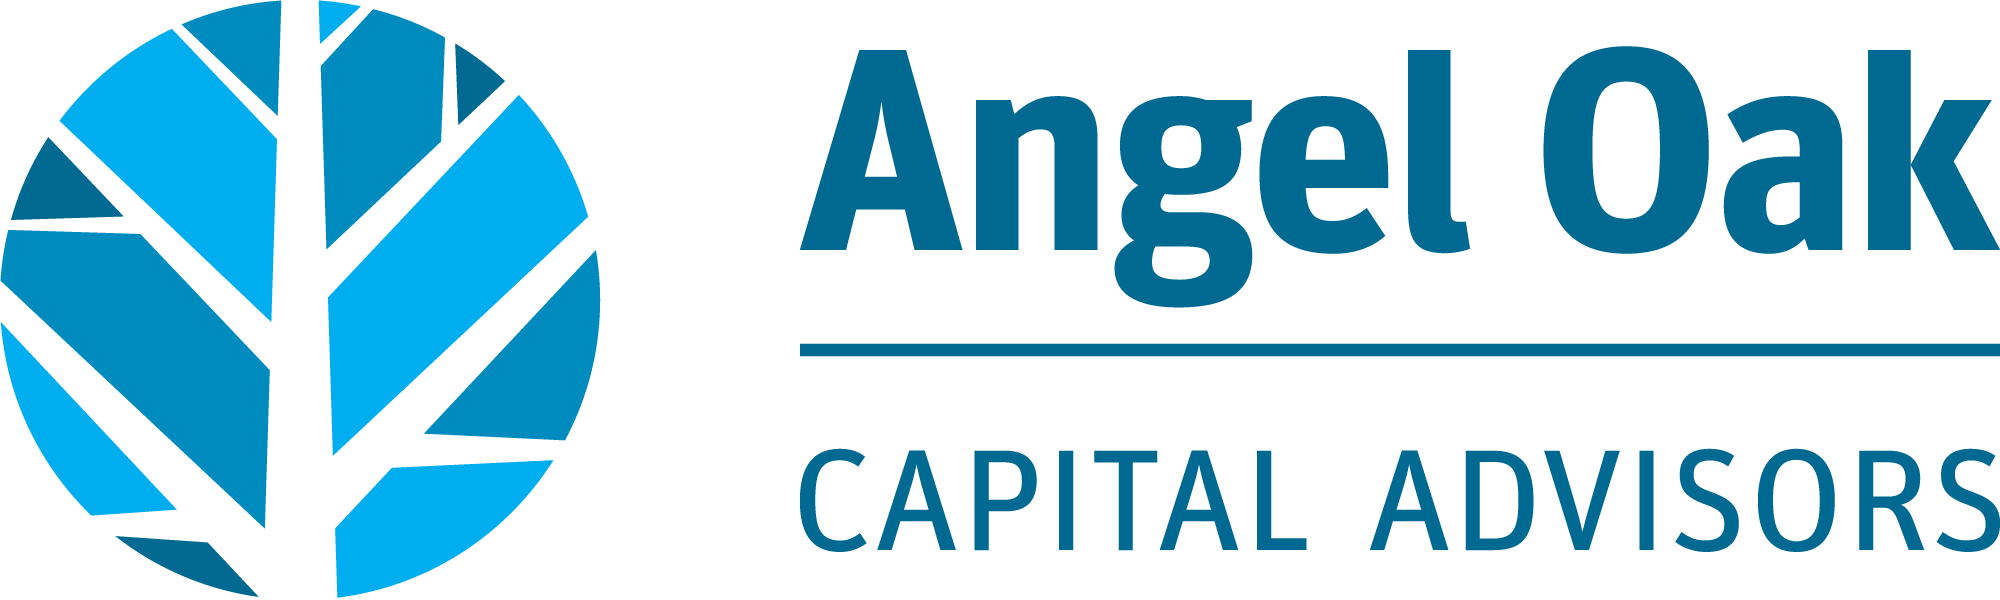 Angel Oak Capital